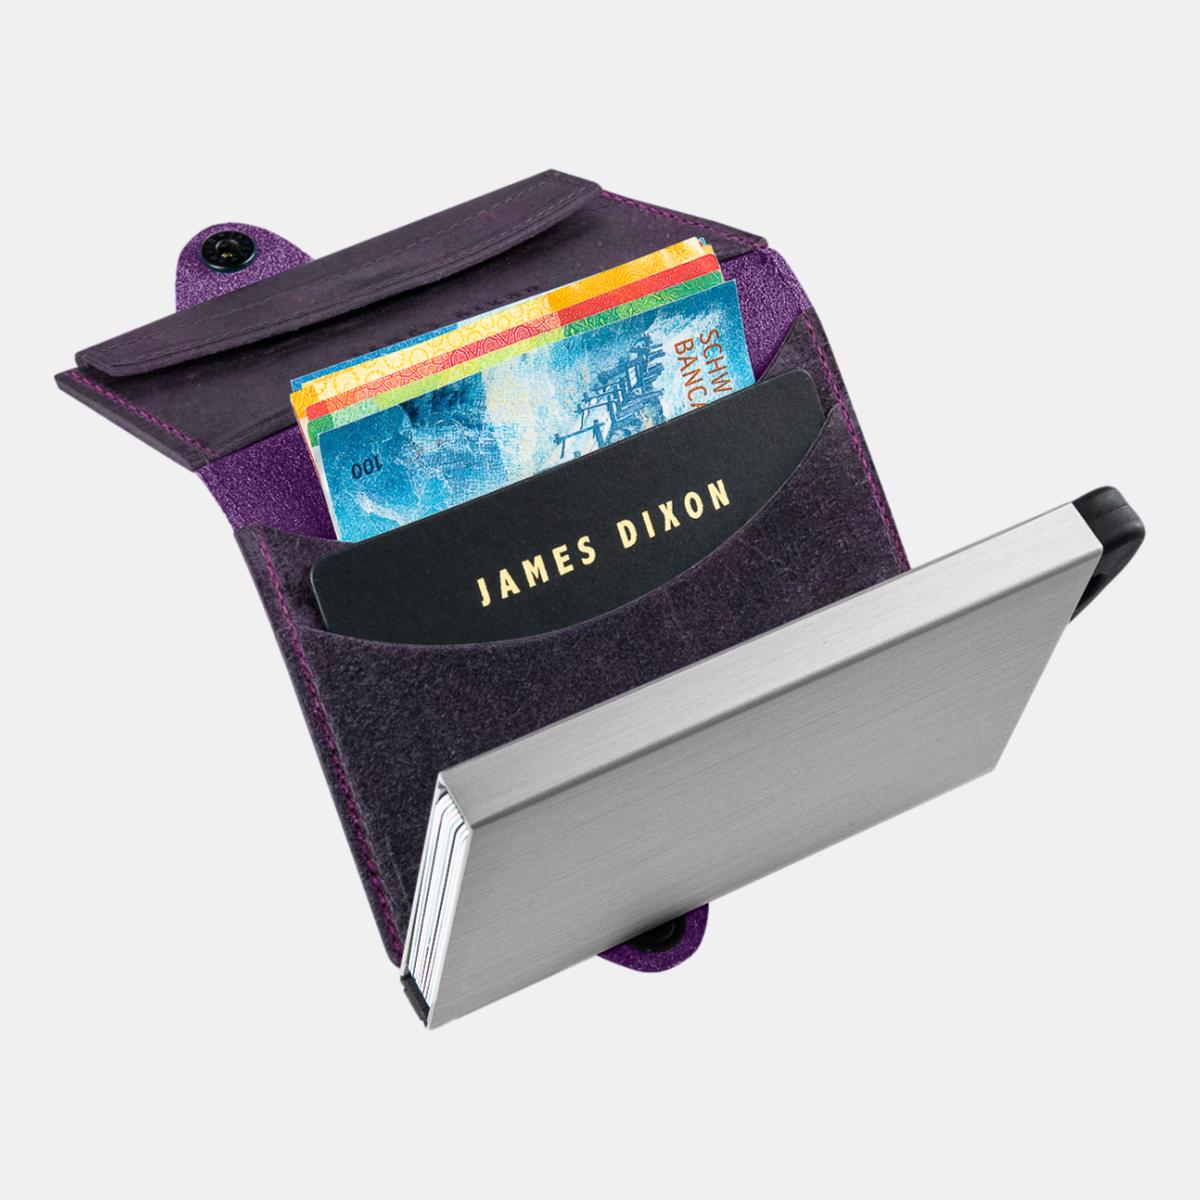 jd0209 jamed dixon boton raw purple coin pocket wallet notes